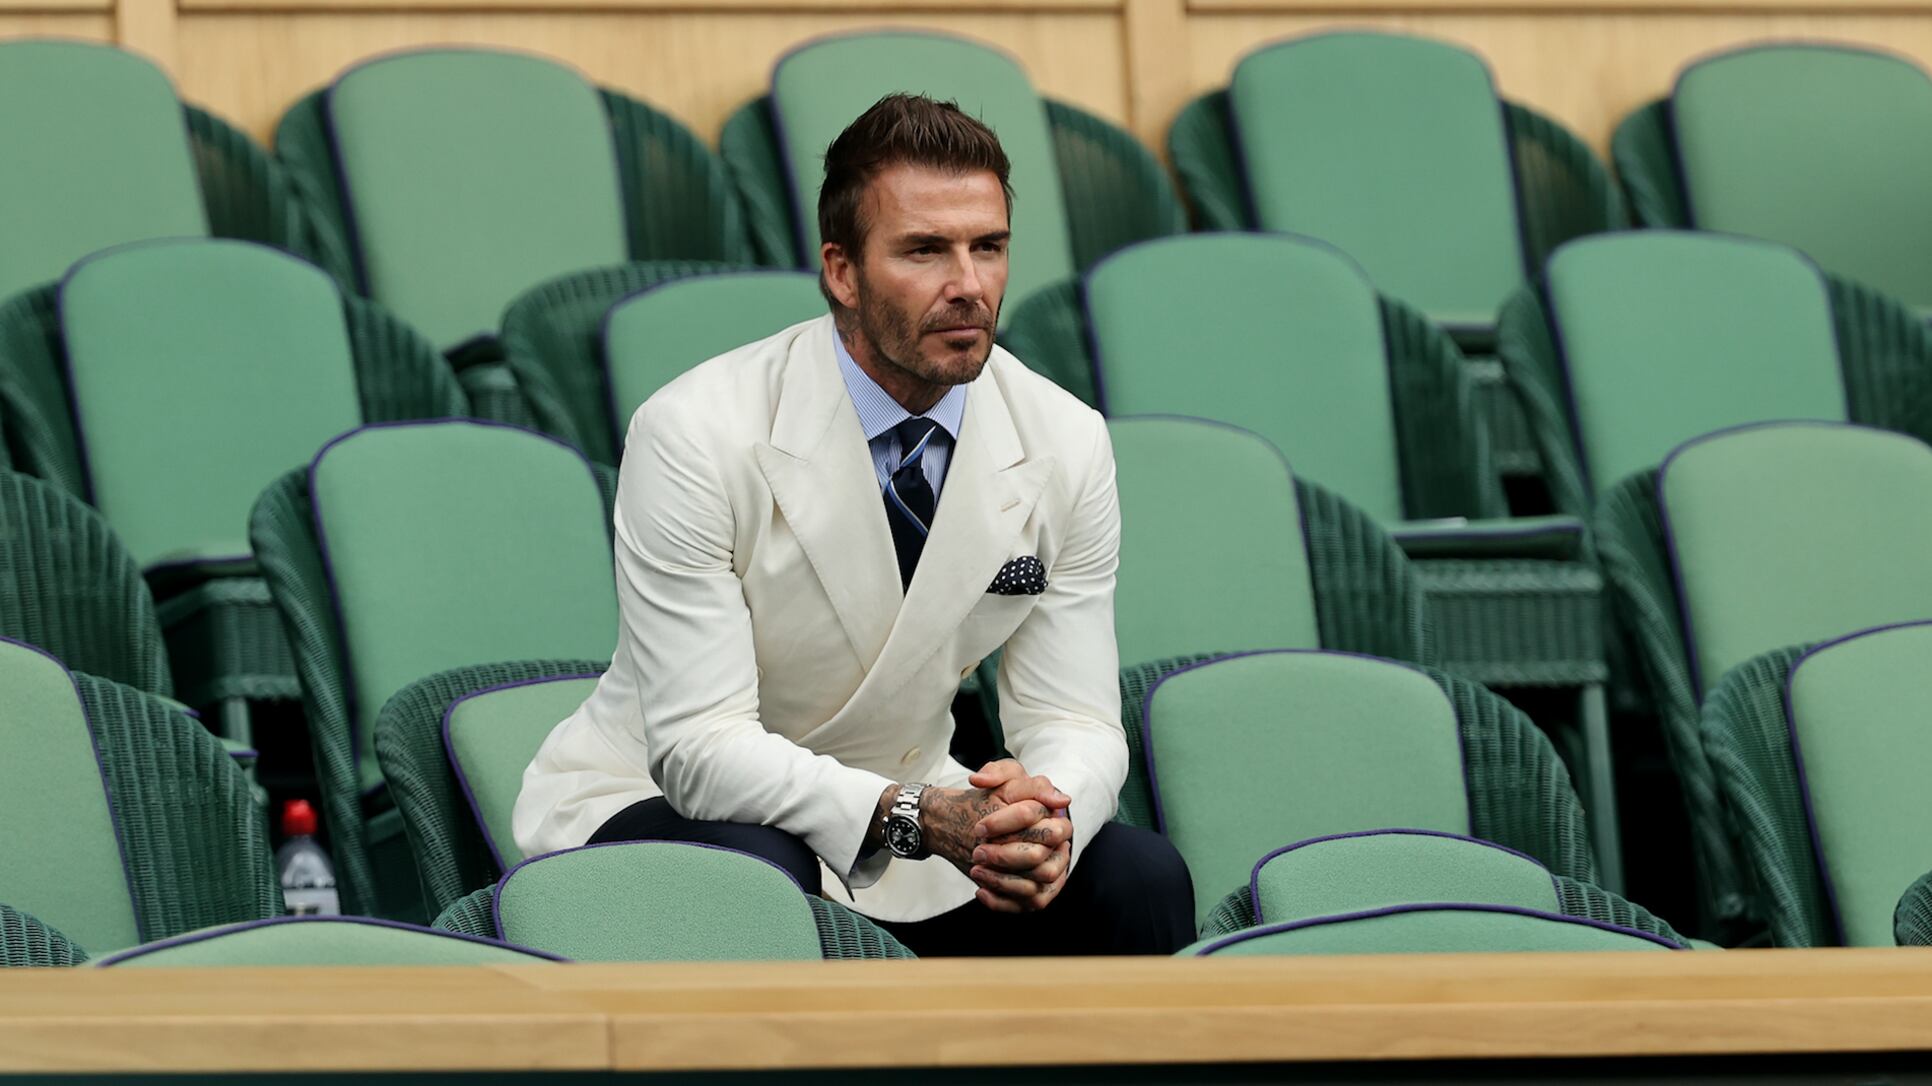 David Beckham | Getty Images